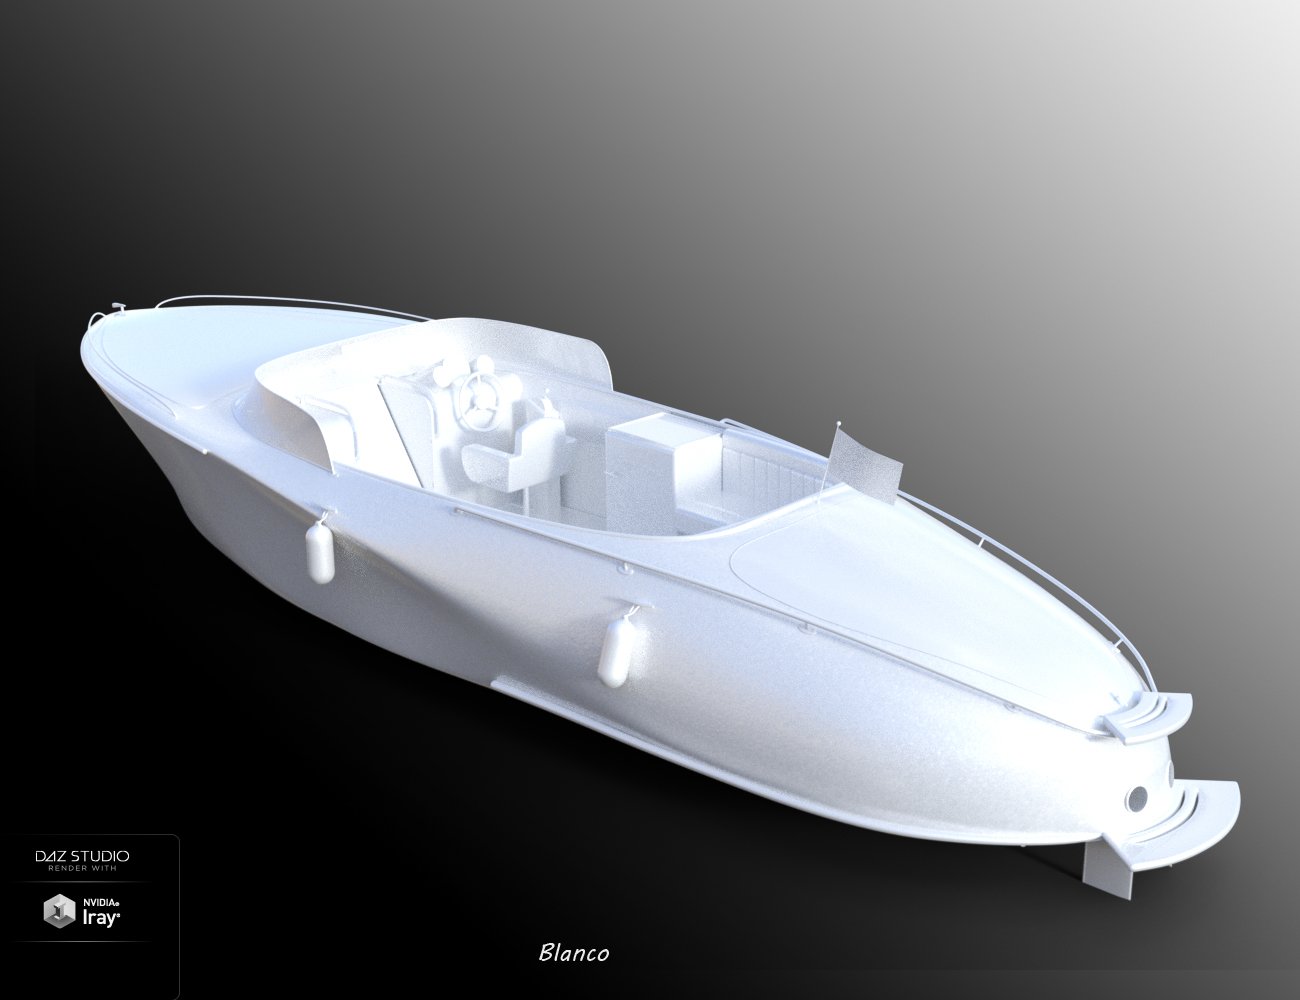 PW Speed Boat Epic "Wave Breaker" by: PW Productions, 3D Models by Daz 3D